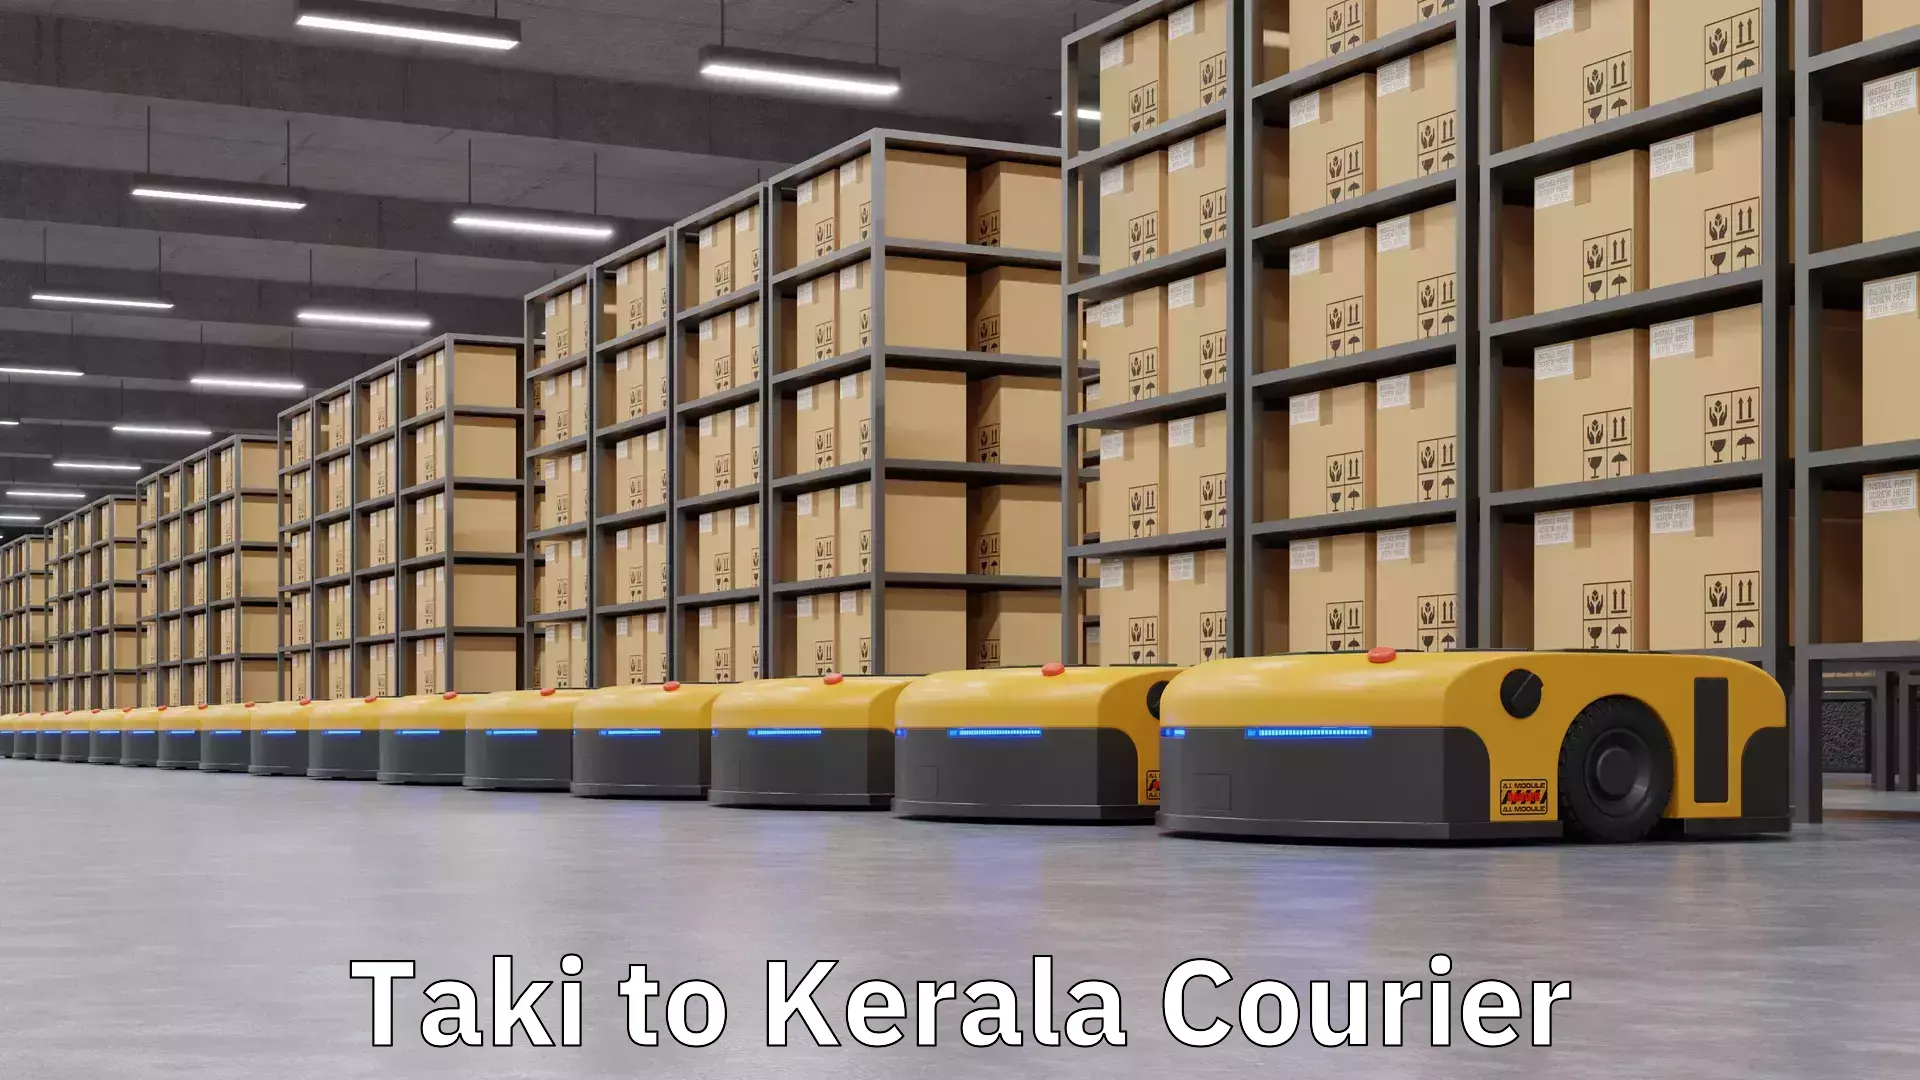 Doorstep delivery service Taki to Kerala